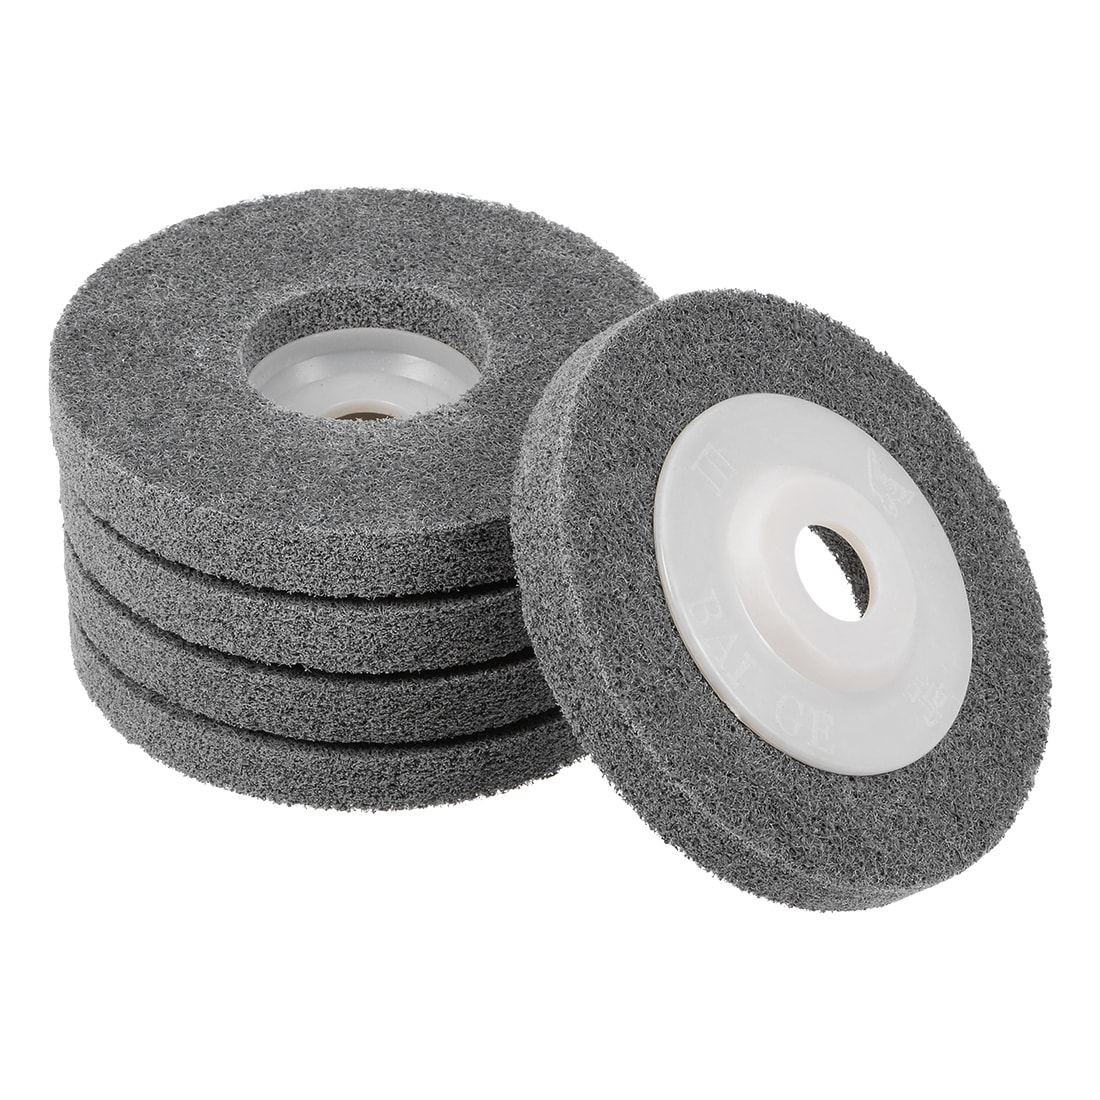 Details about   5pcs 4" Nylon Fiber Wheel Abrasive Polishing Buffing Disc Pad Angle Grinder C# 